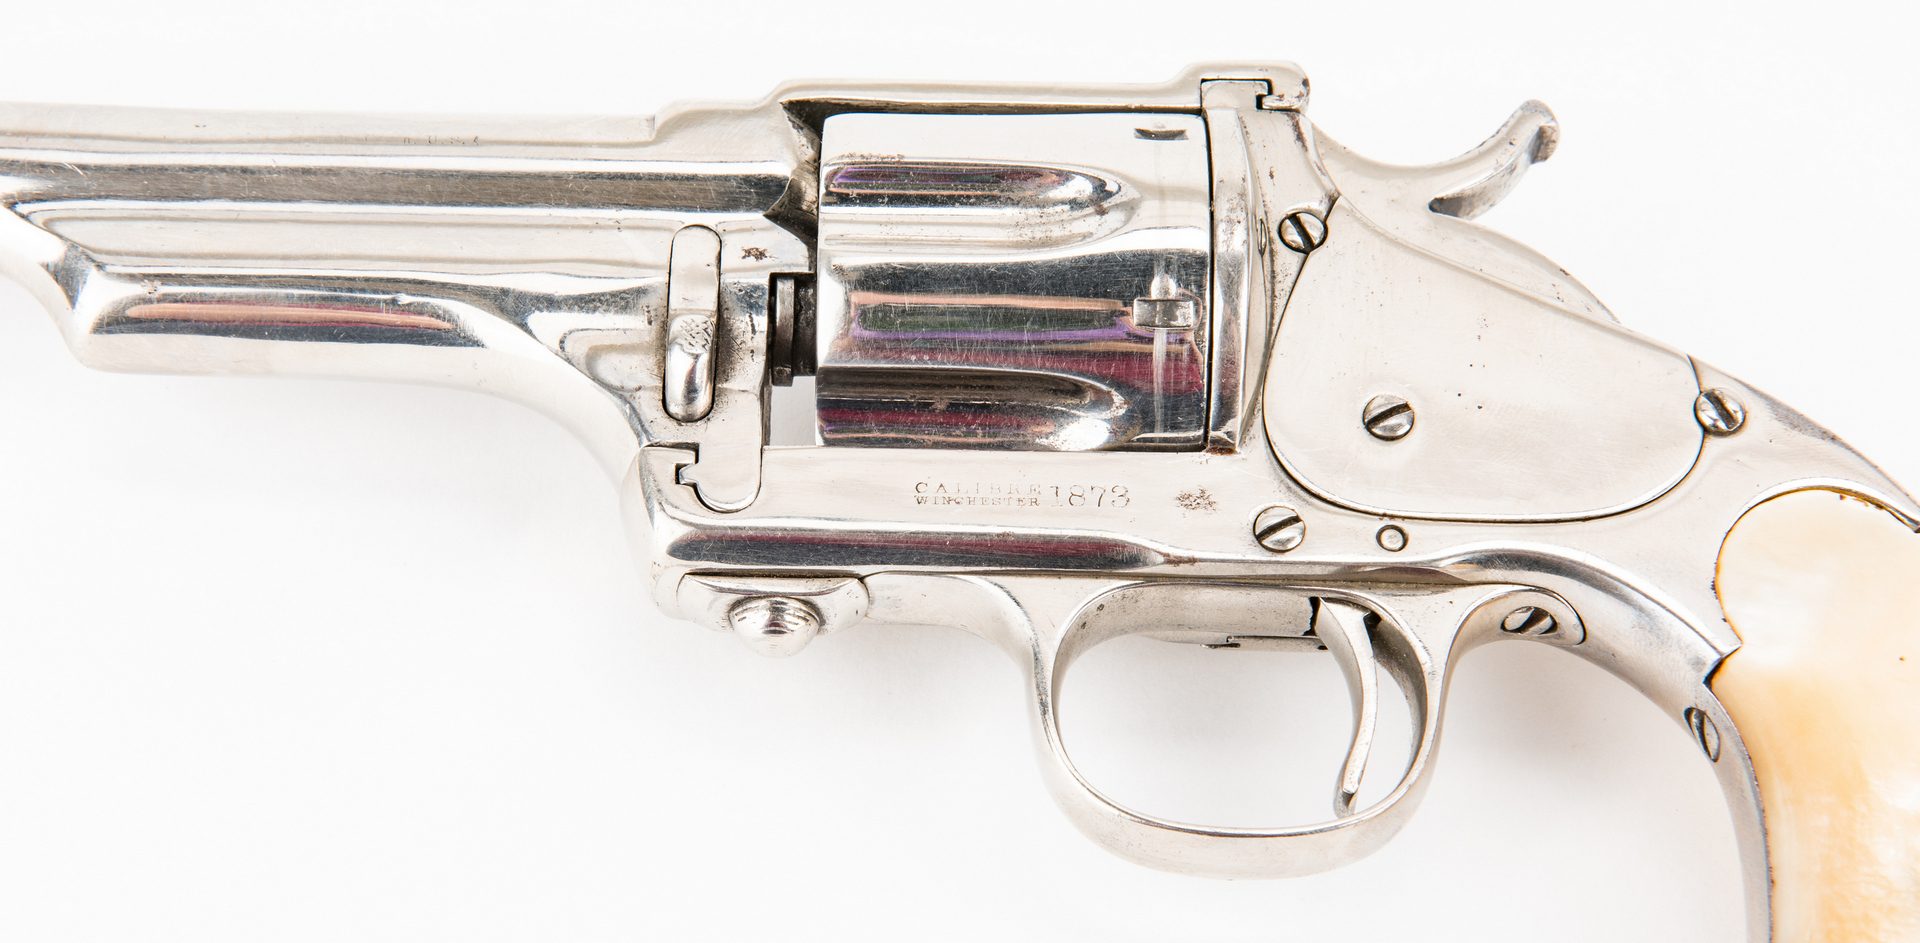 Lot 784: Merwin & Hulbert 3rd Model Frontier Army SA Revolver, .44-40 WCF